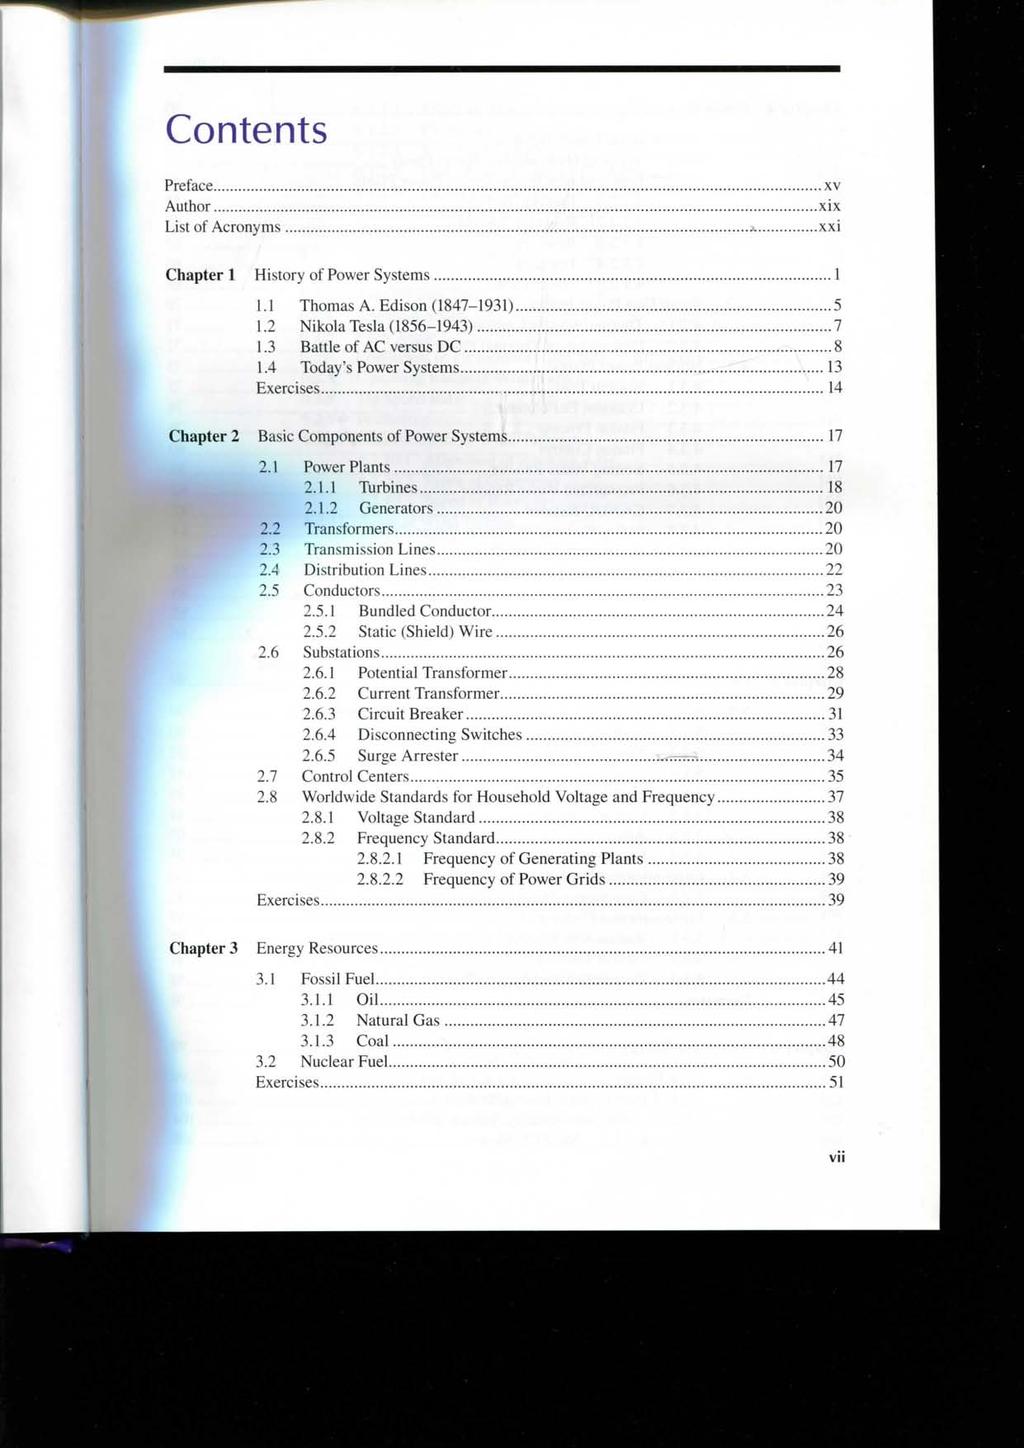 Contents Prefece xv Author xix List of Acronyms «xxi Chapter 1 History of Power Systems 1 LI Thomas A. Edison (1847-1931) 5 1.2 Nikola Tesla (1856-1943) 7 1.3 Battle of AC versus DC 8 1.